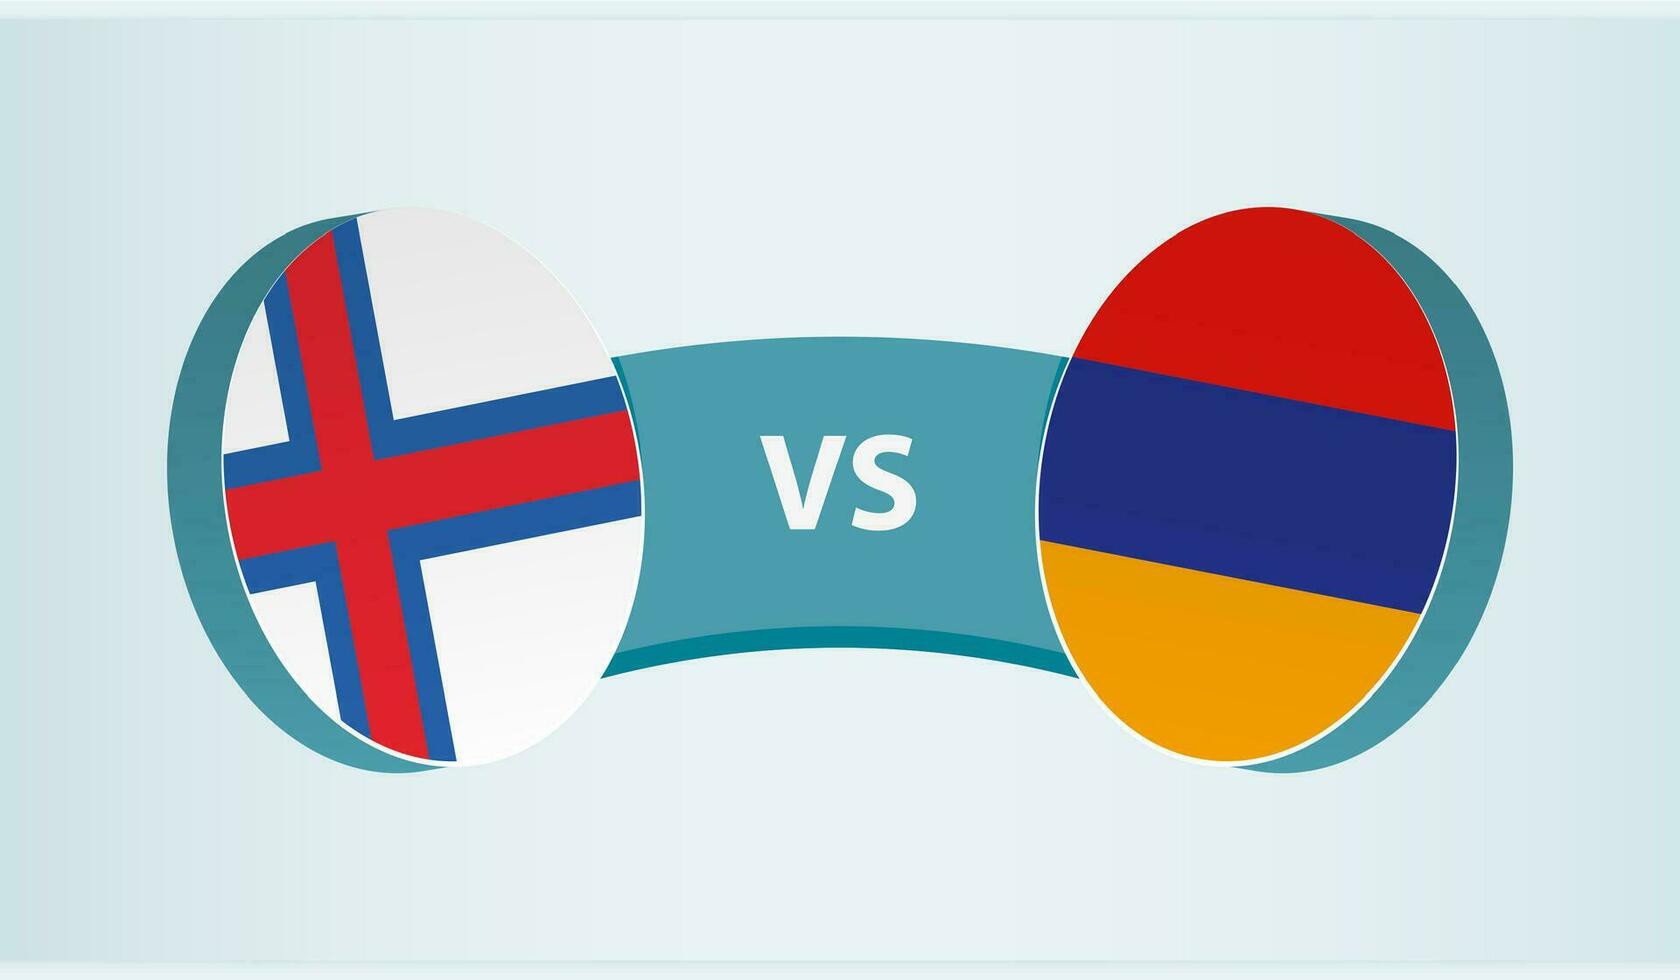 Faroe Islands versus Armenia, team sports competition concept. vector